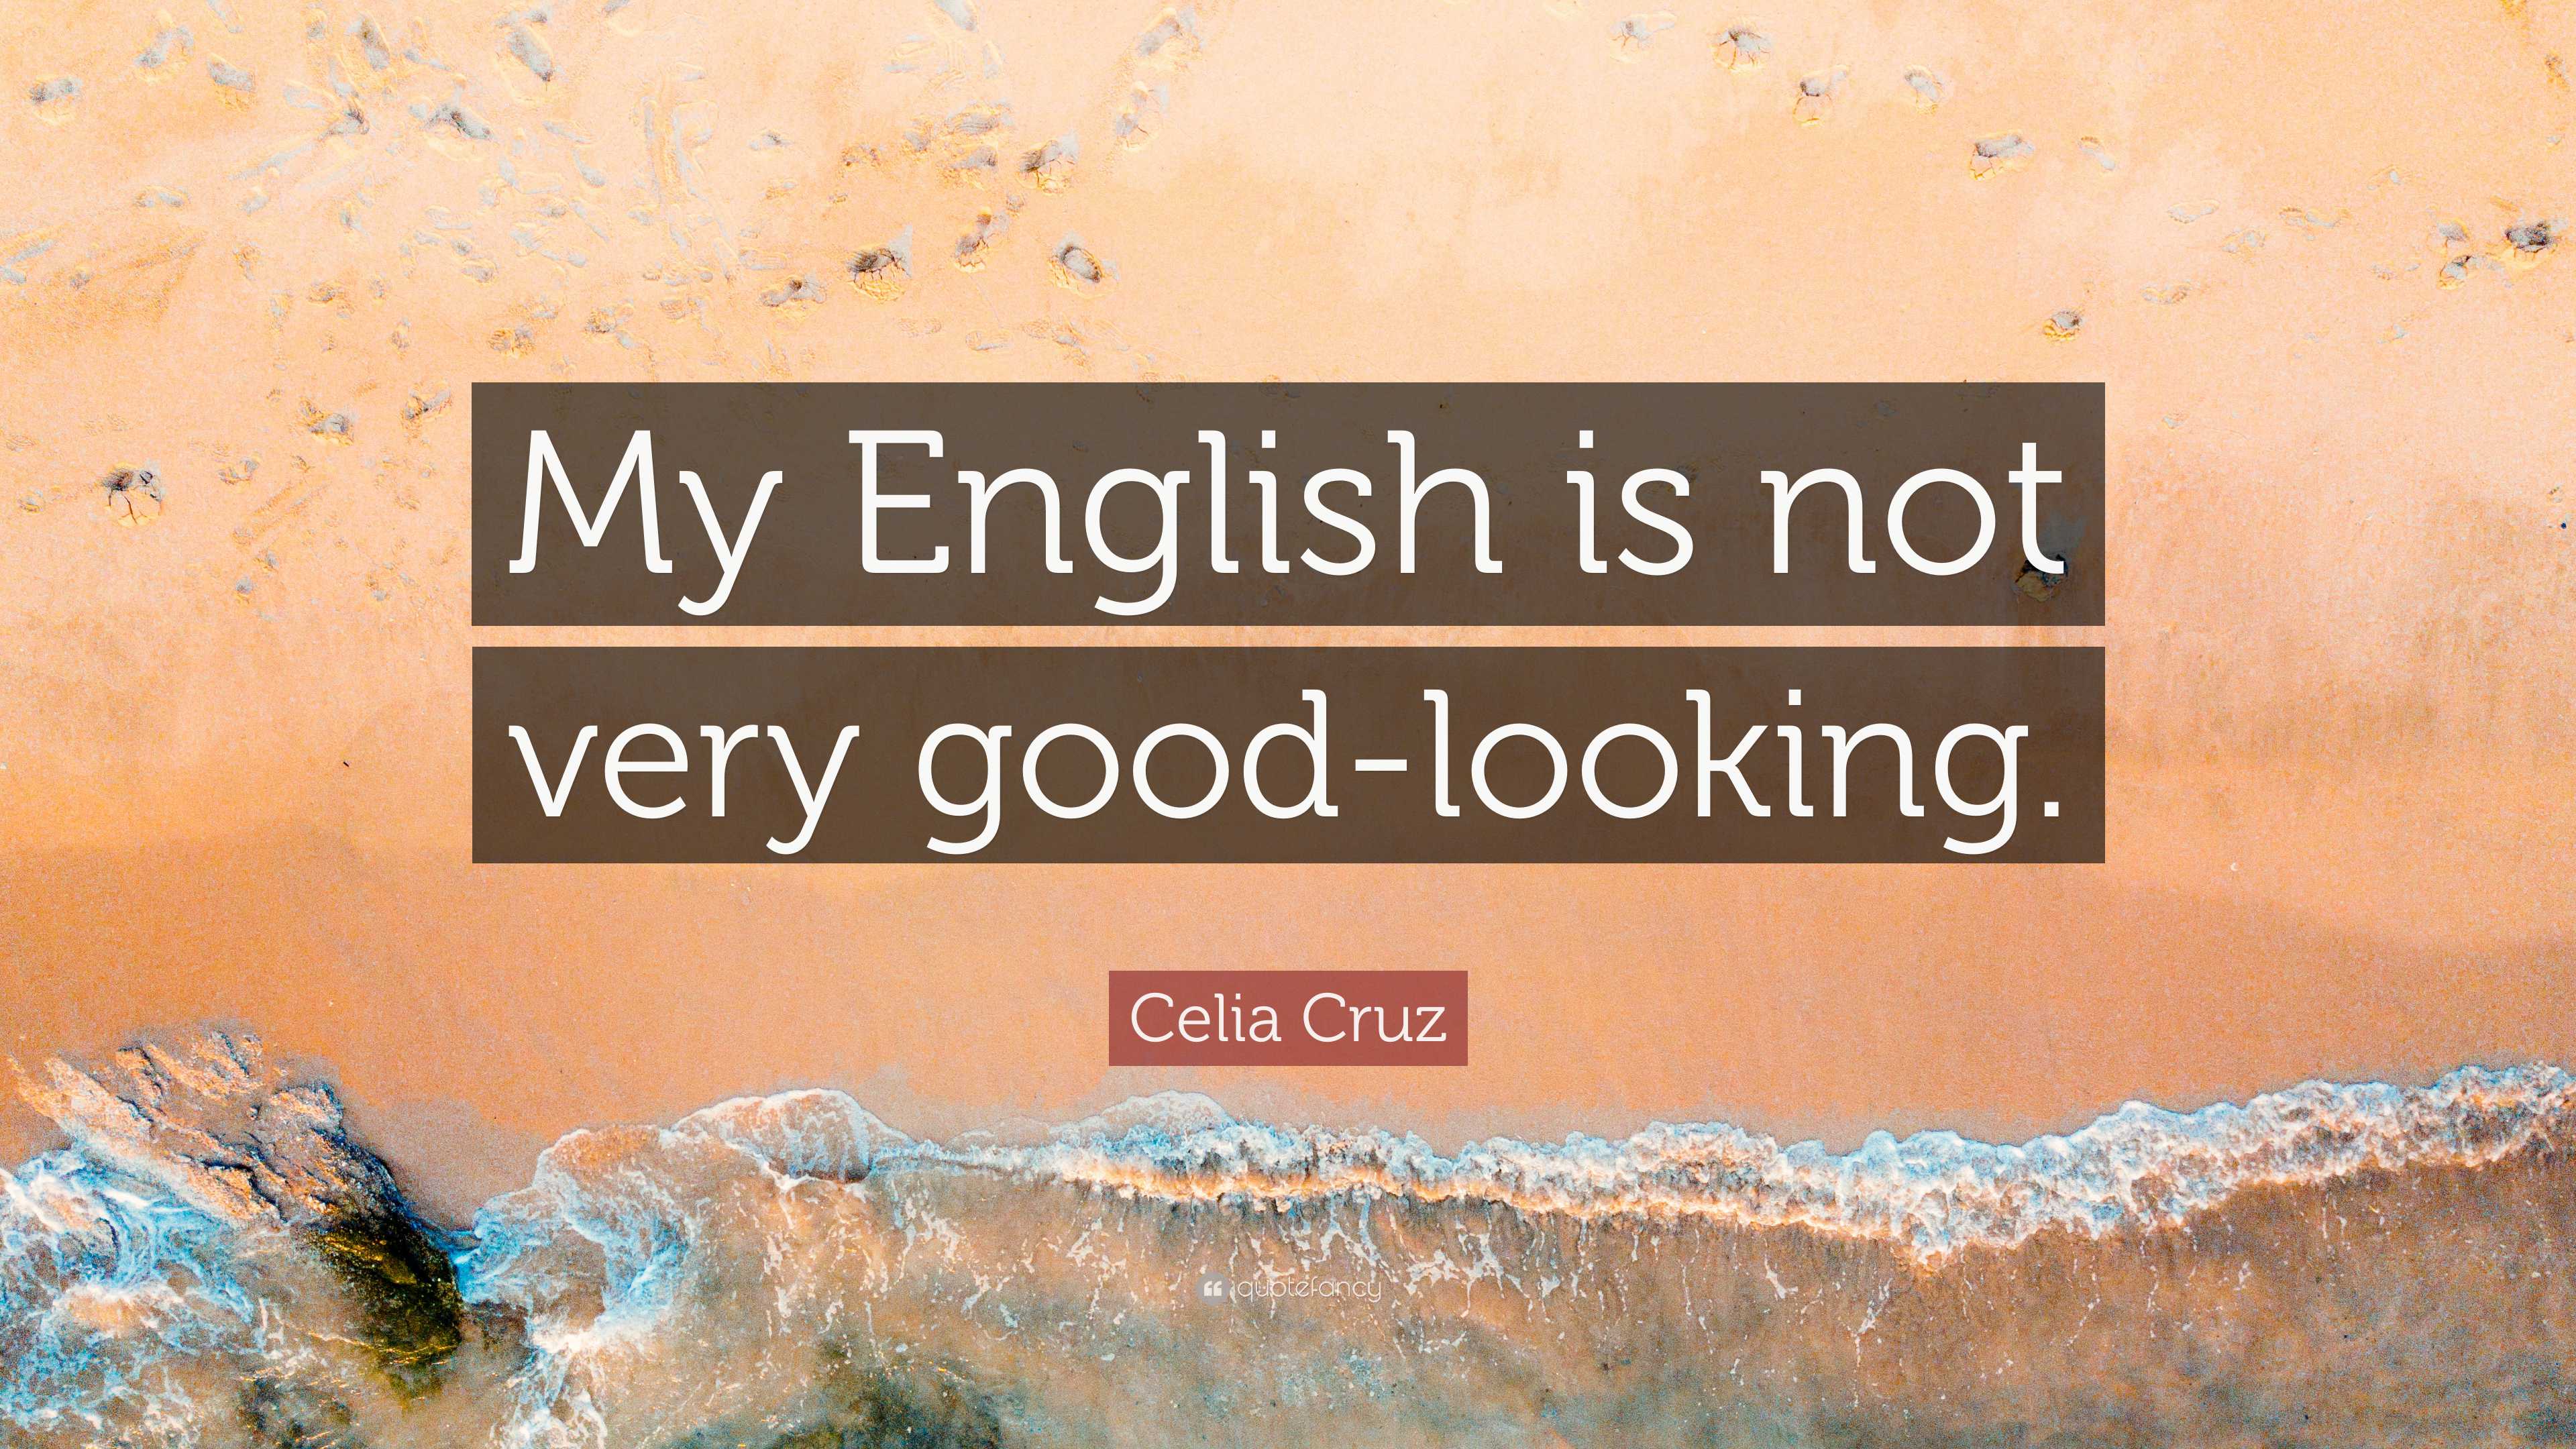 Celia Cruz Quote: “My English is not very good-looking.”